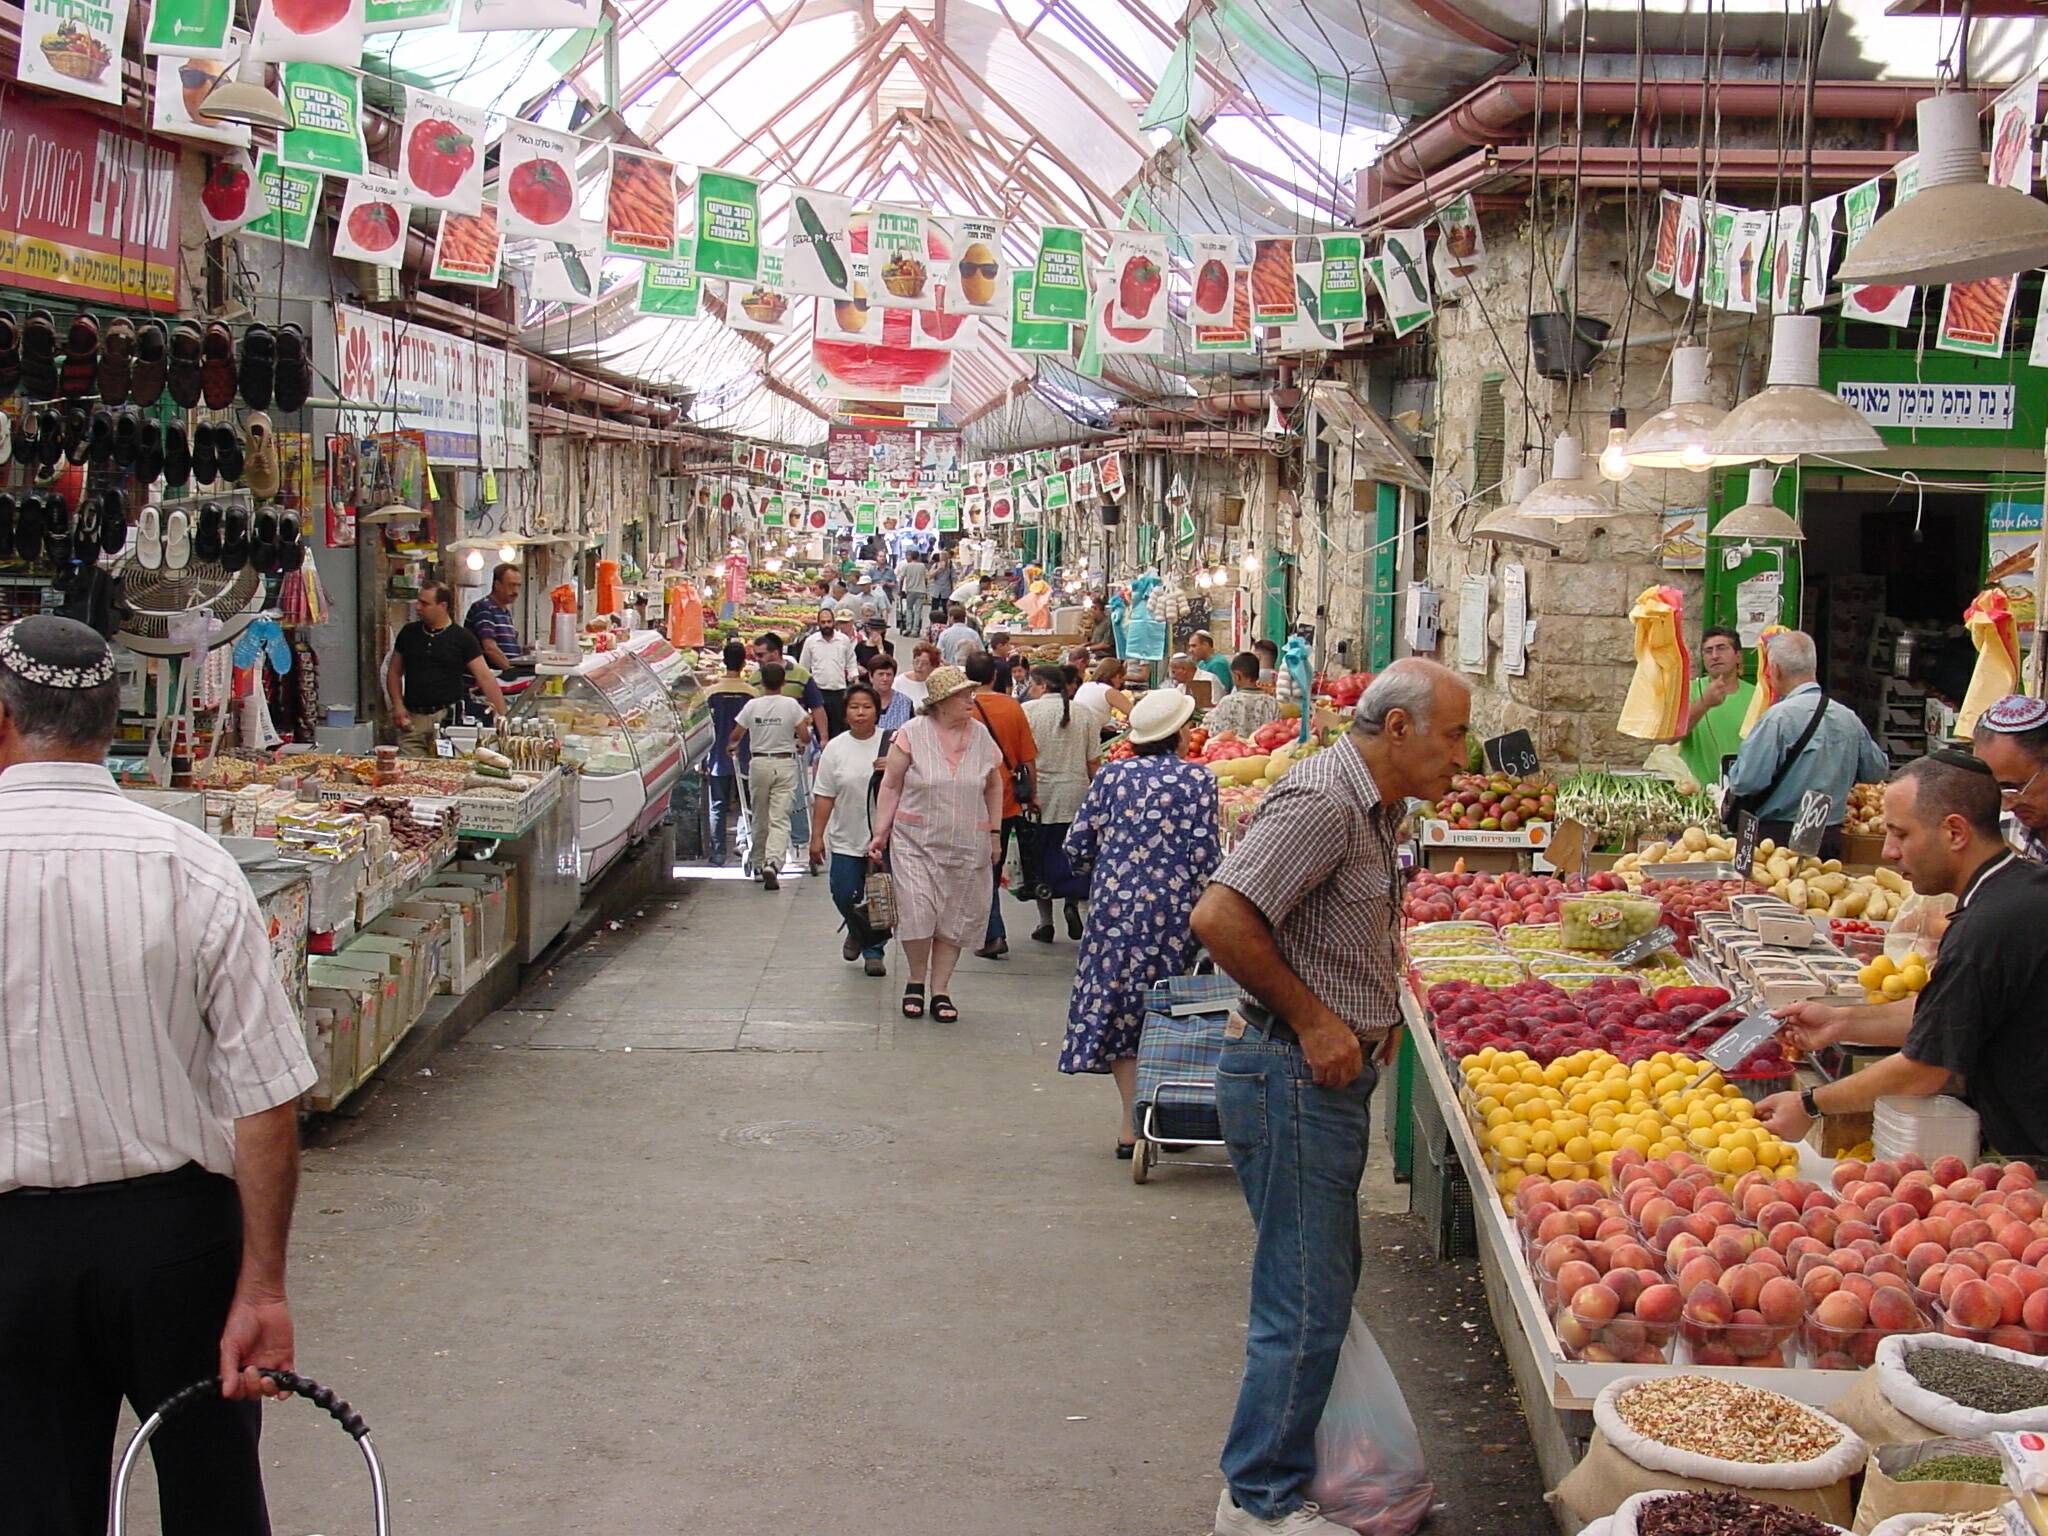 Mahane Yehuda market in Israel